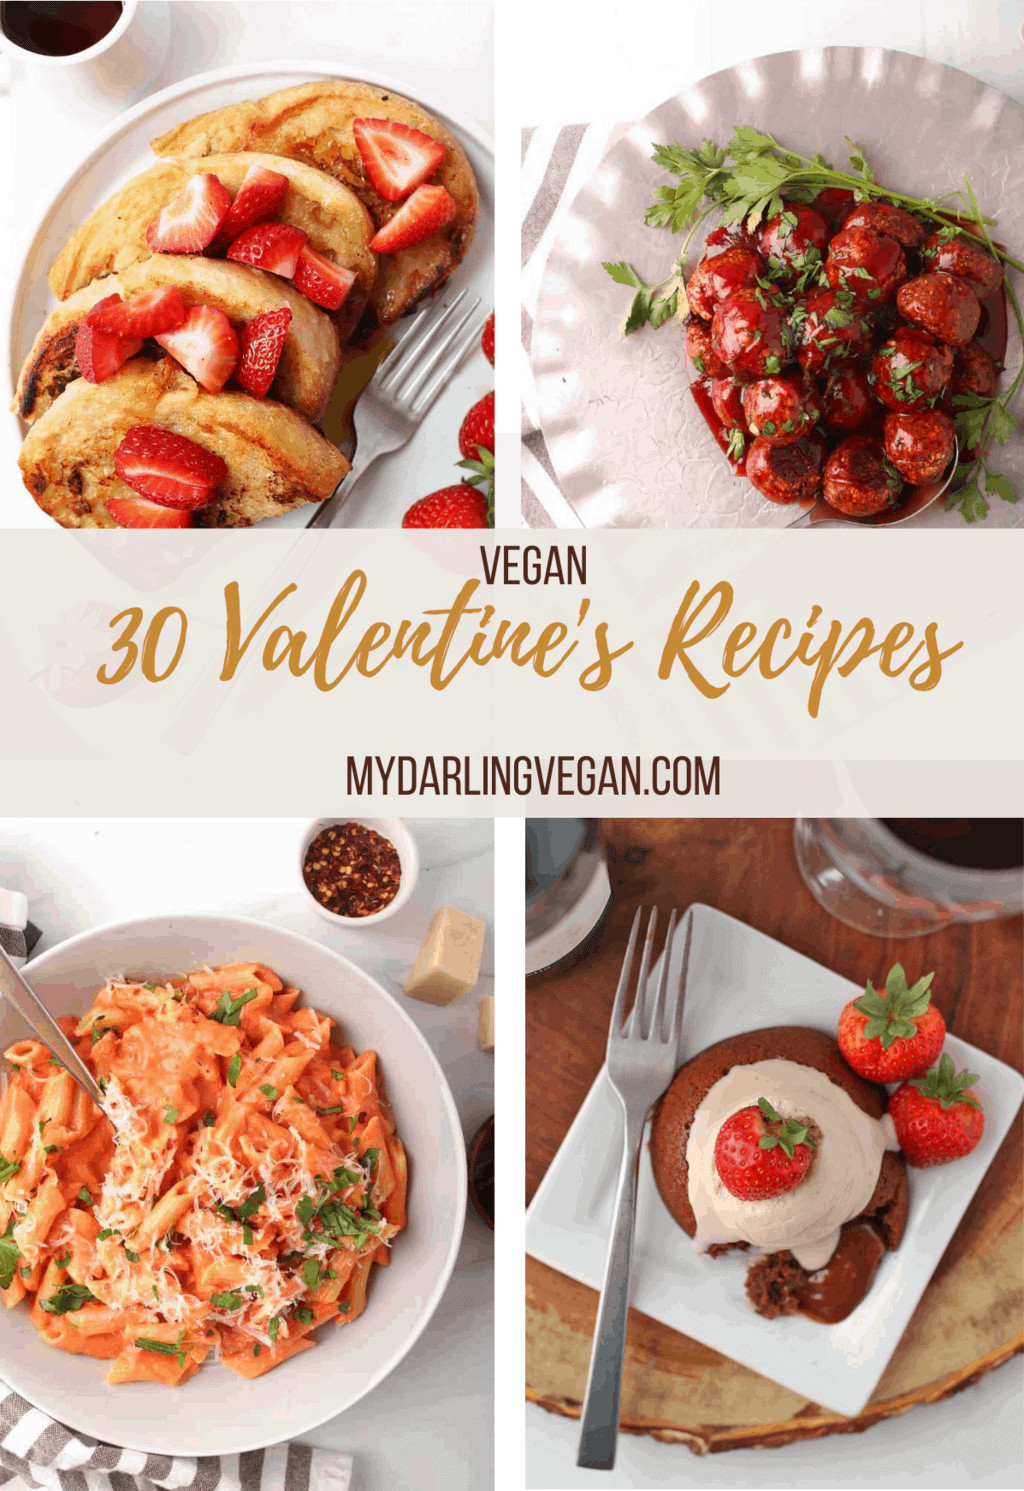 Vegan Valentine'S Day Recipes
 30 Vegan Valentine s Day Recipes